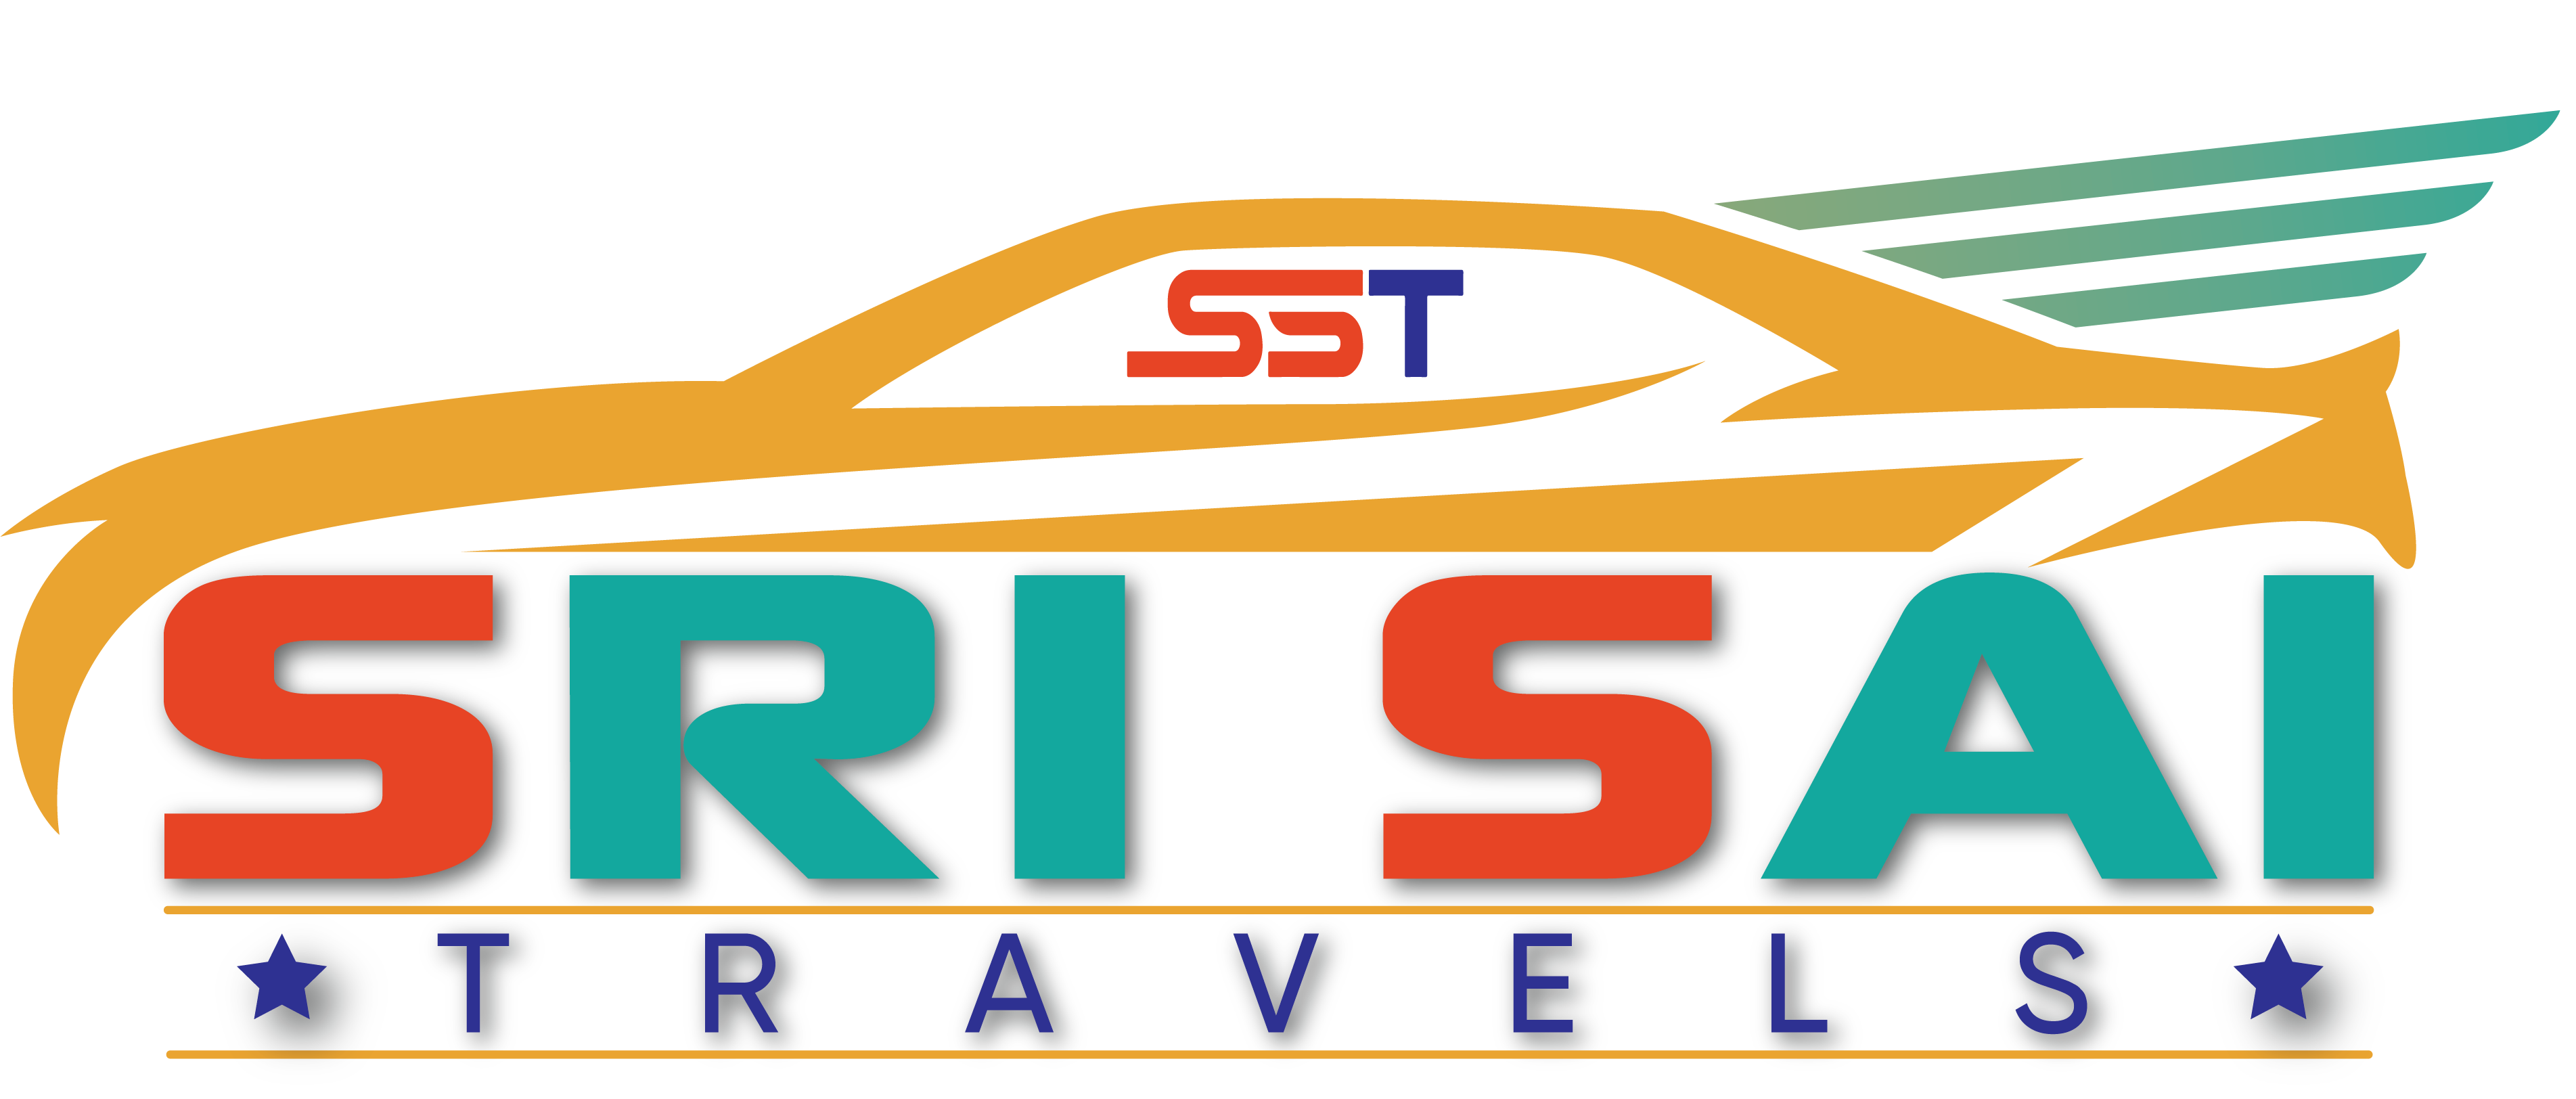 shri sai tour and travels